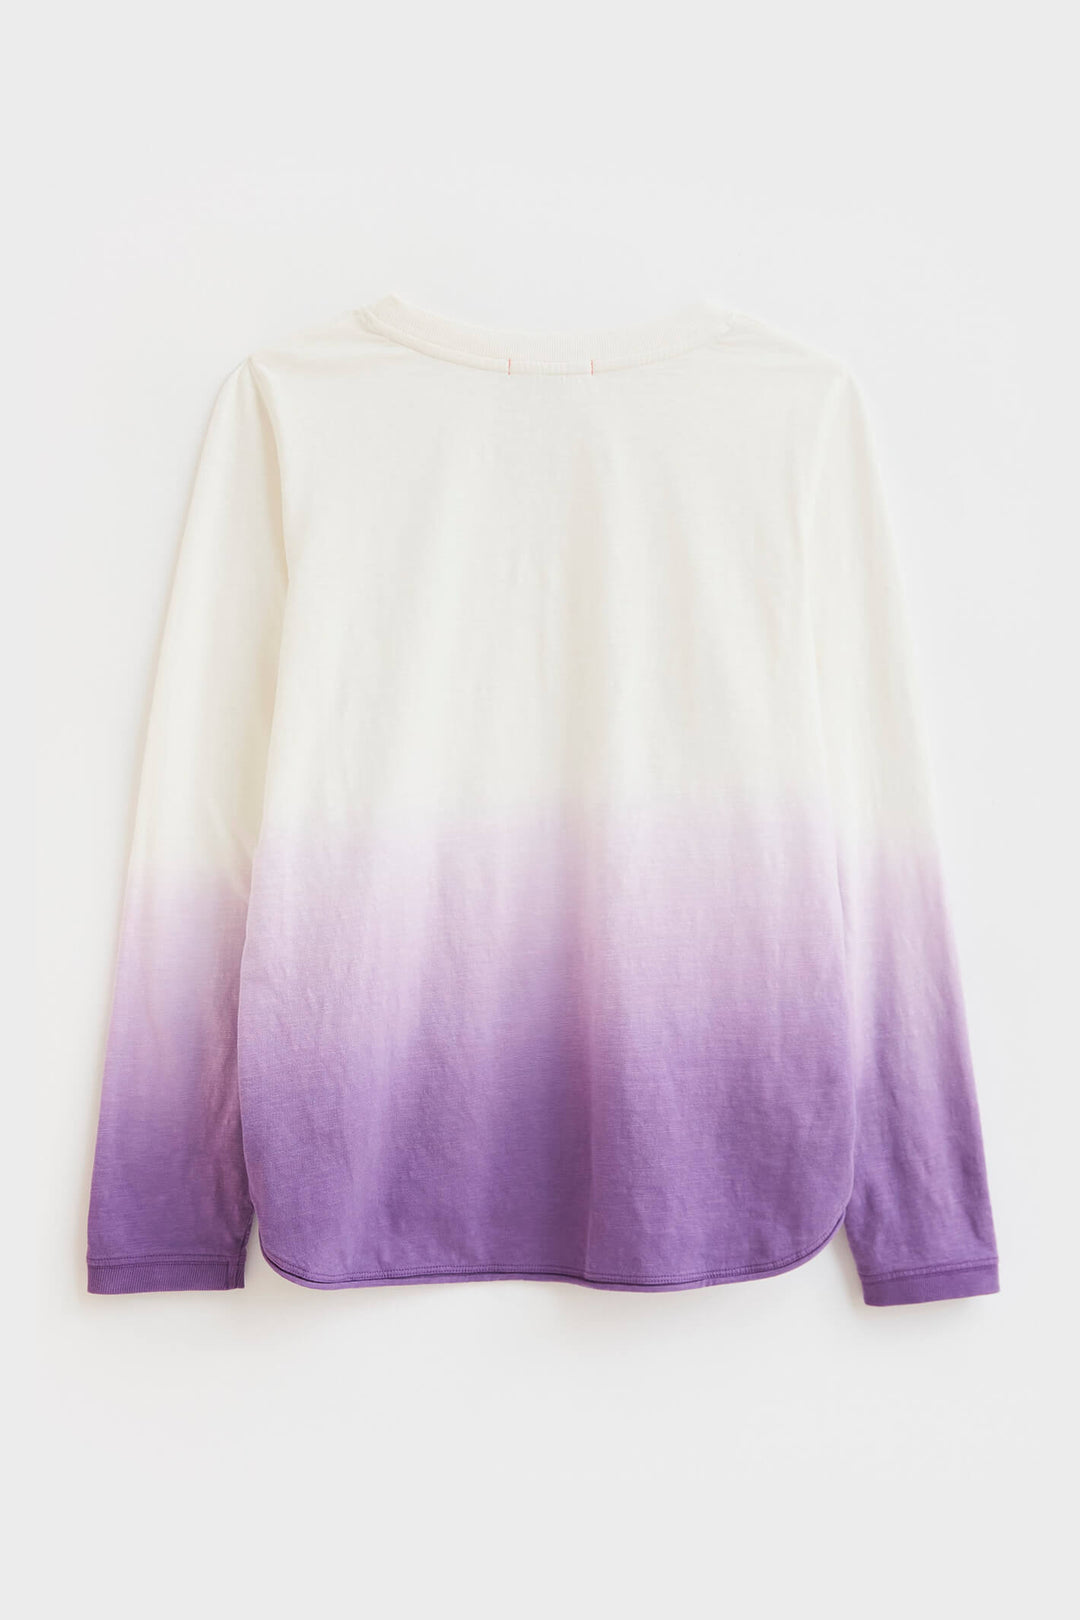 White Stuff 434211 Purple Multi Cassie Crew Long Sleeve T-Shirt - Shirley Allum Boutique